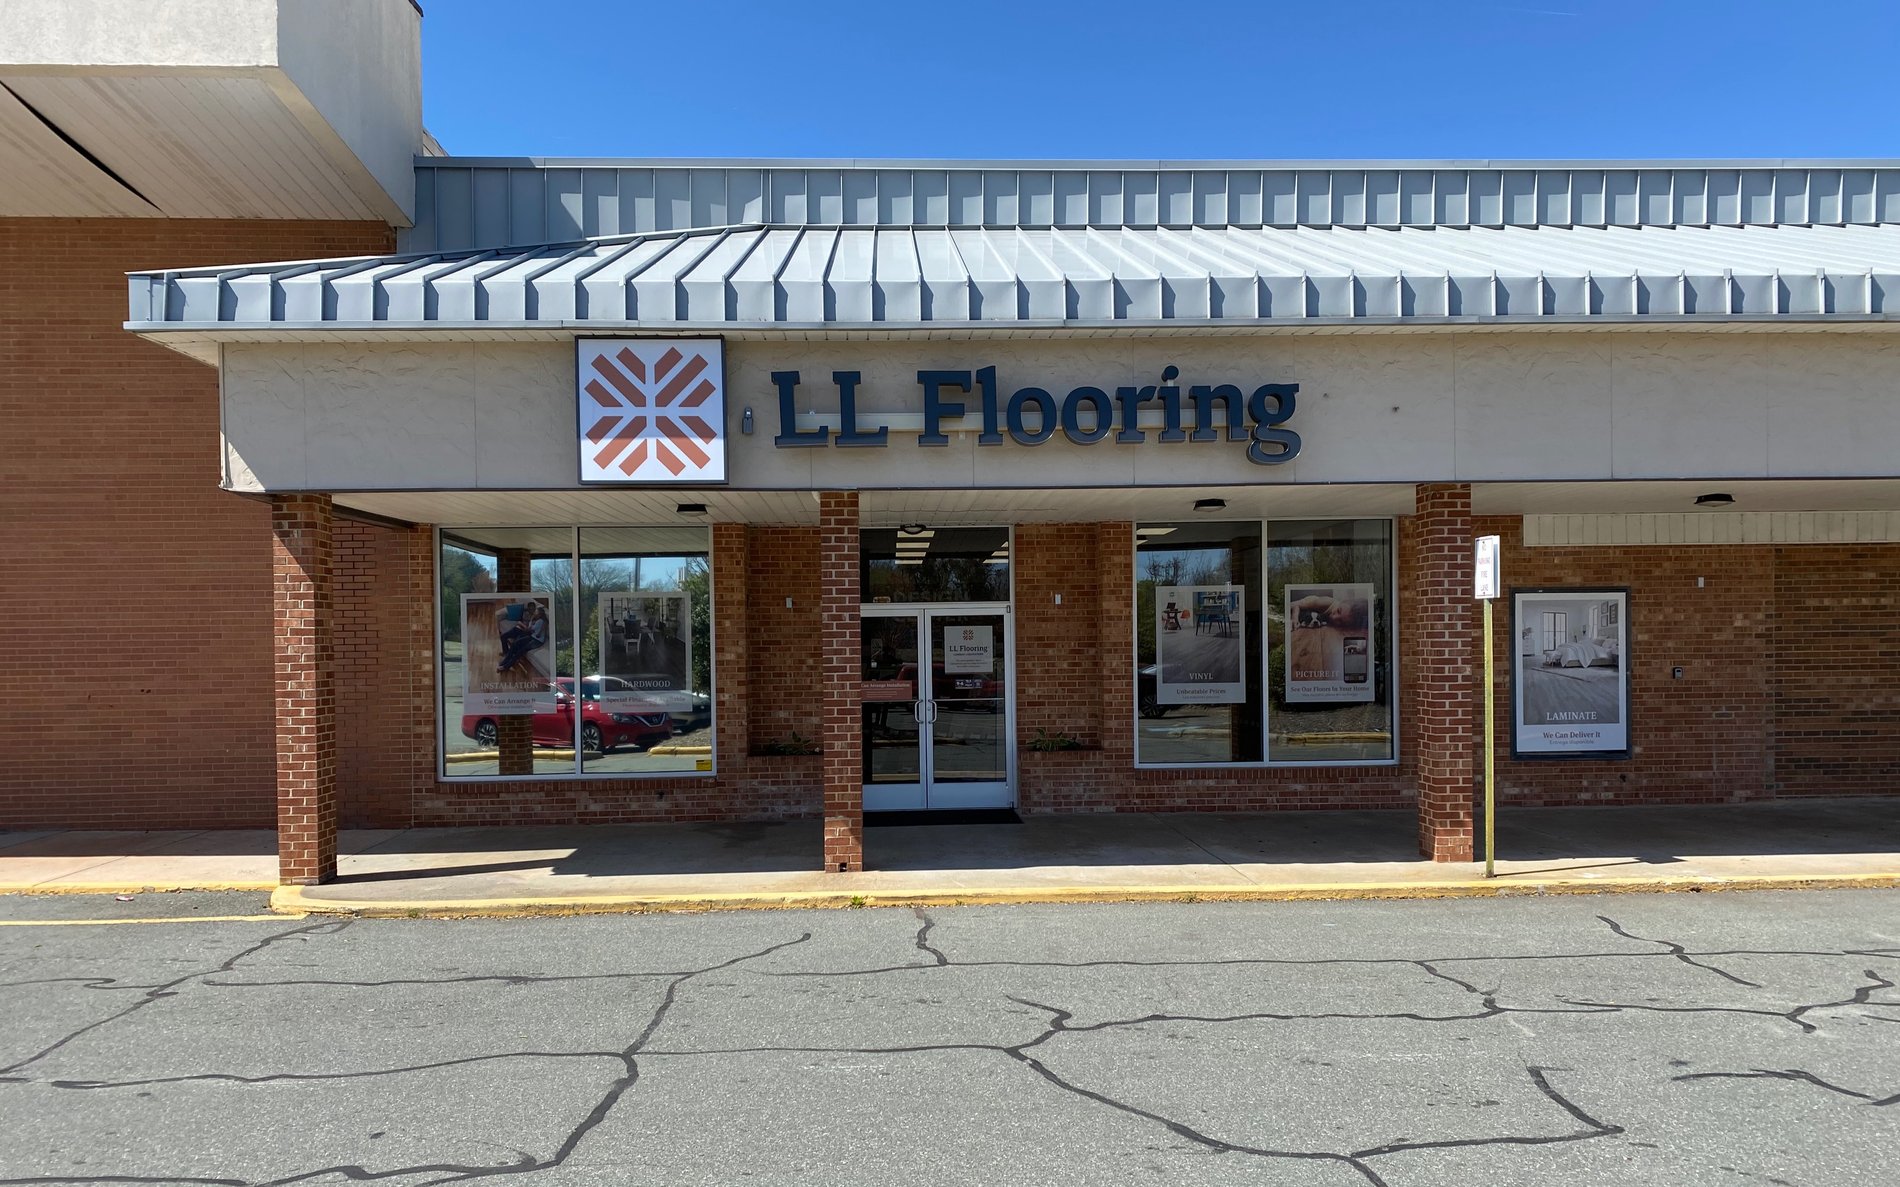 LL Flooring #1449 Burlington | 1809 S. Church St. | Storefront